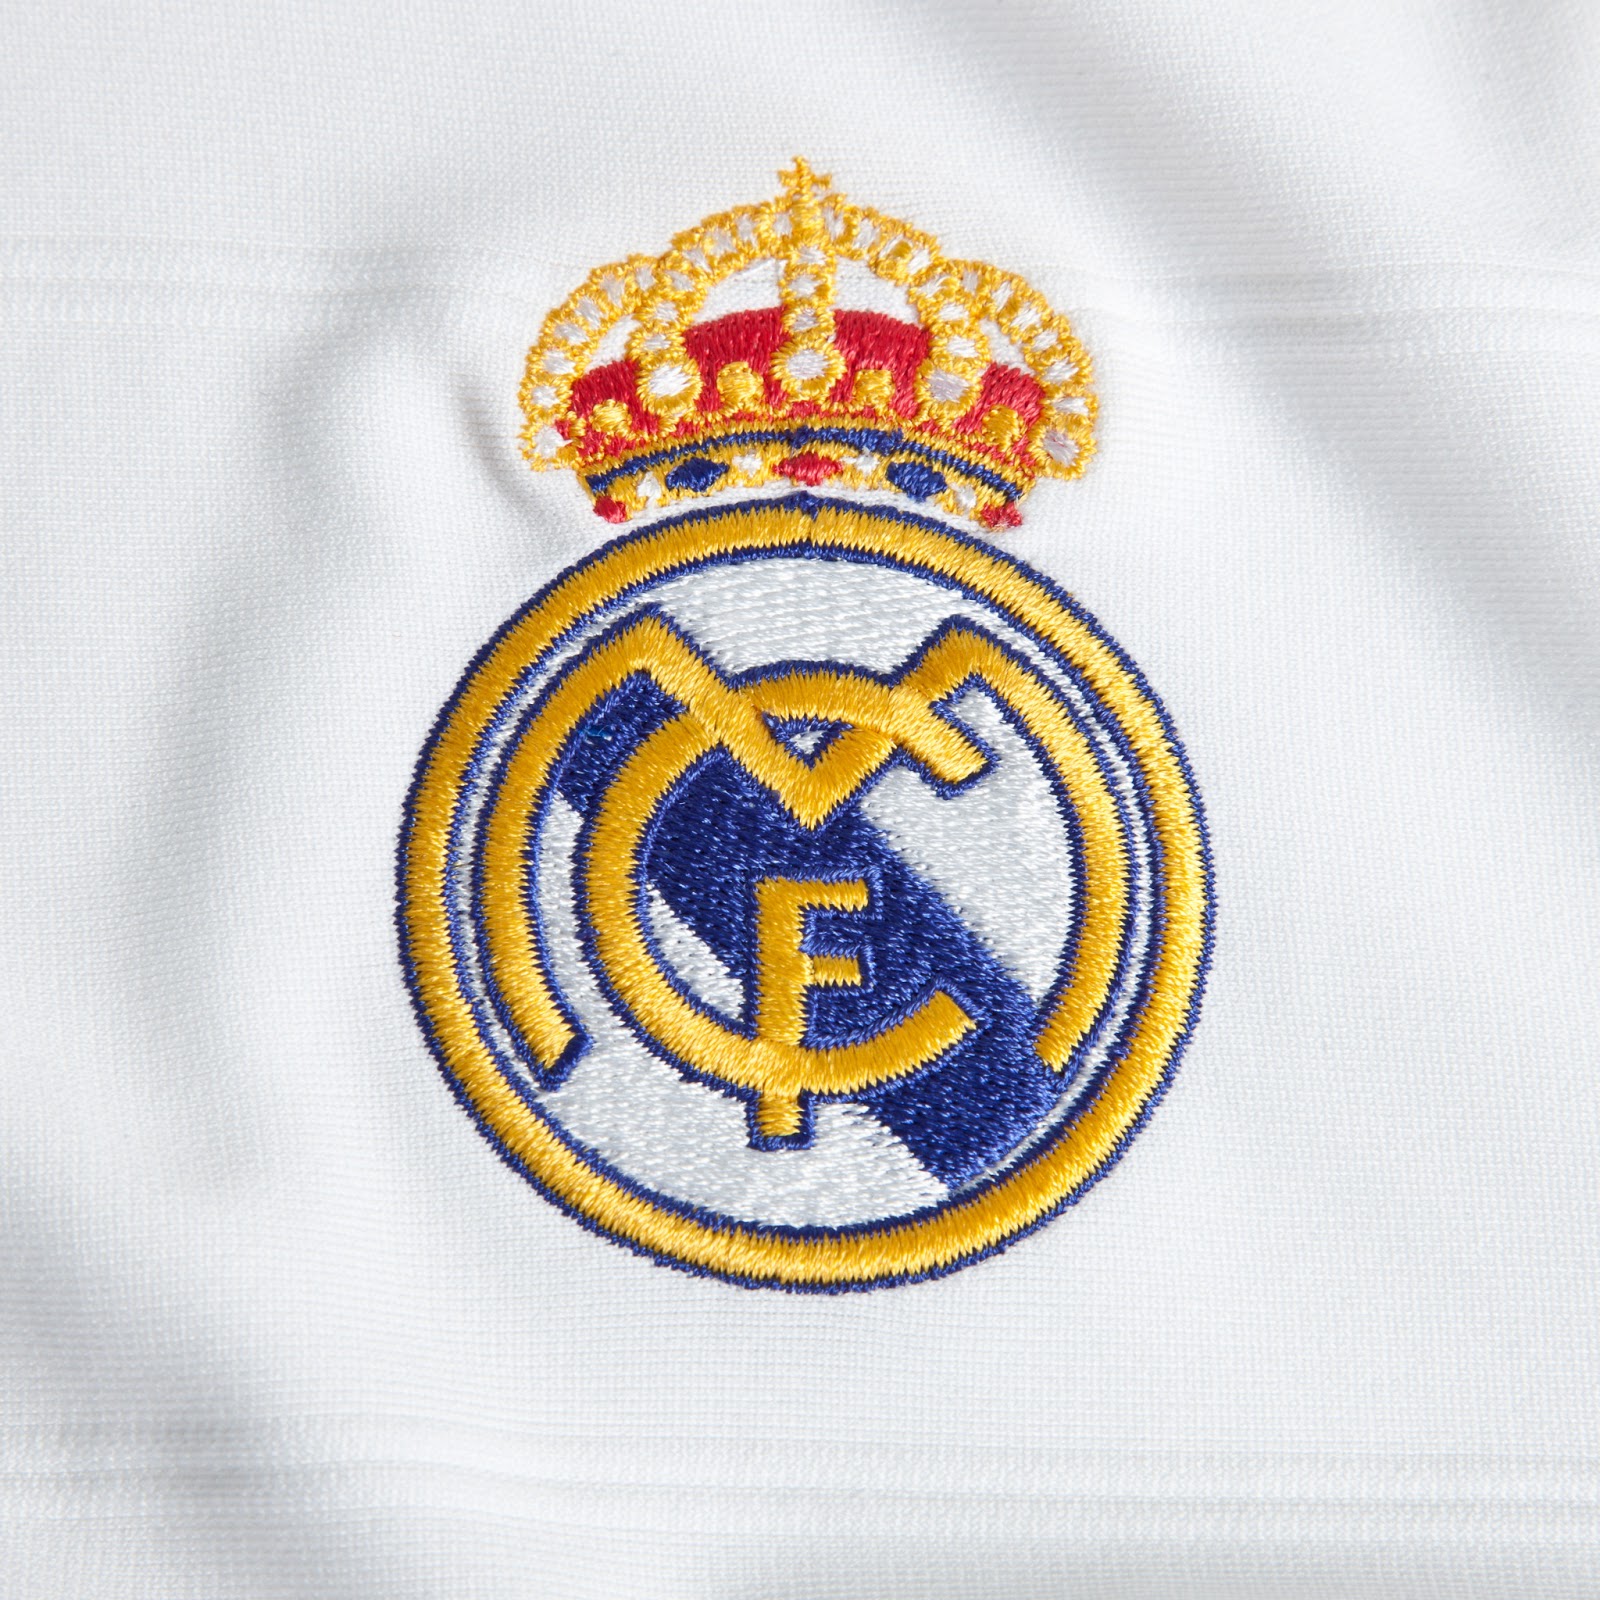 Real Madrid thuisshirt 2013/2014